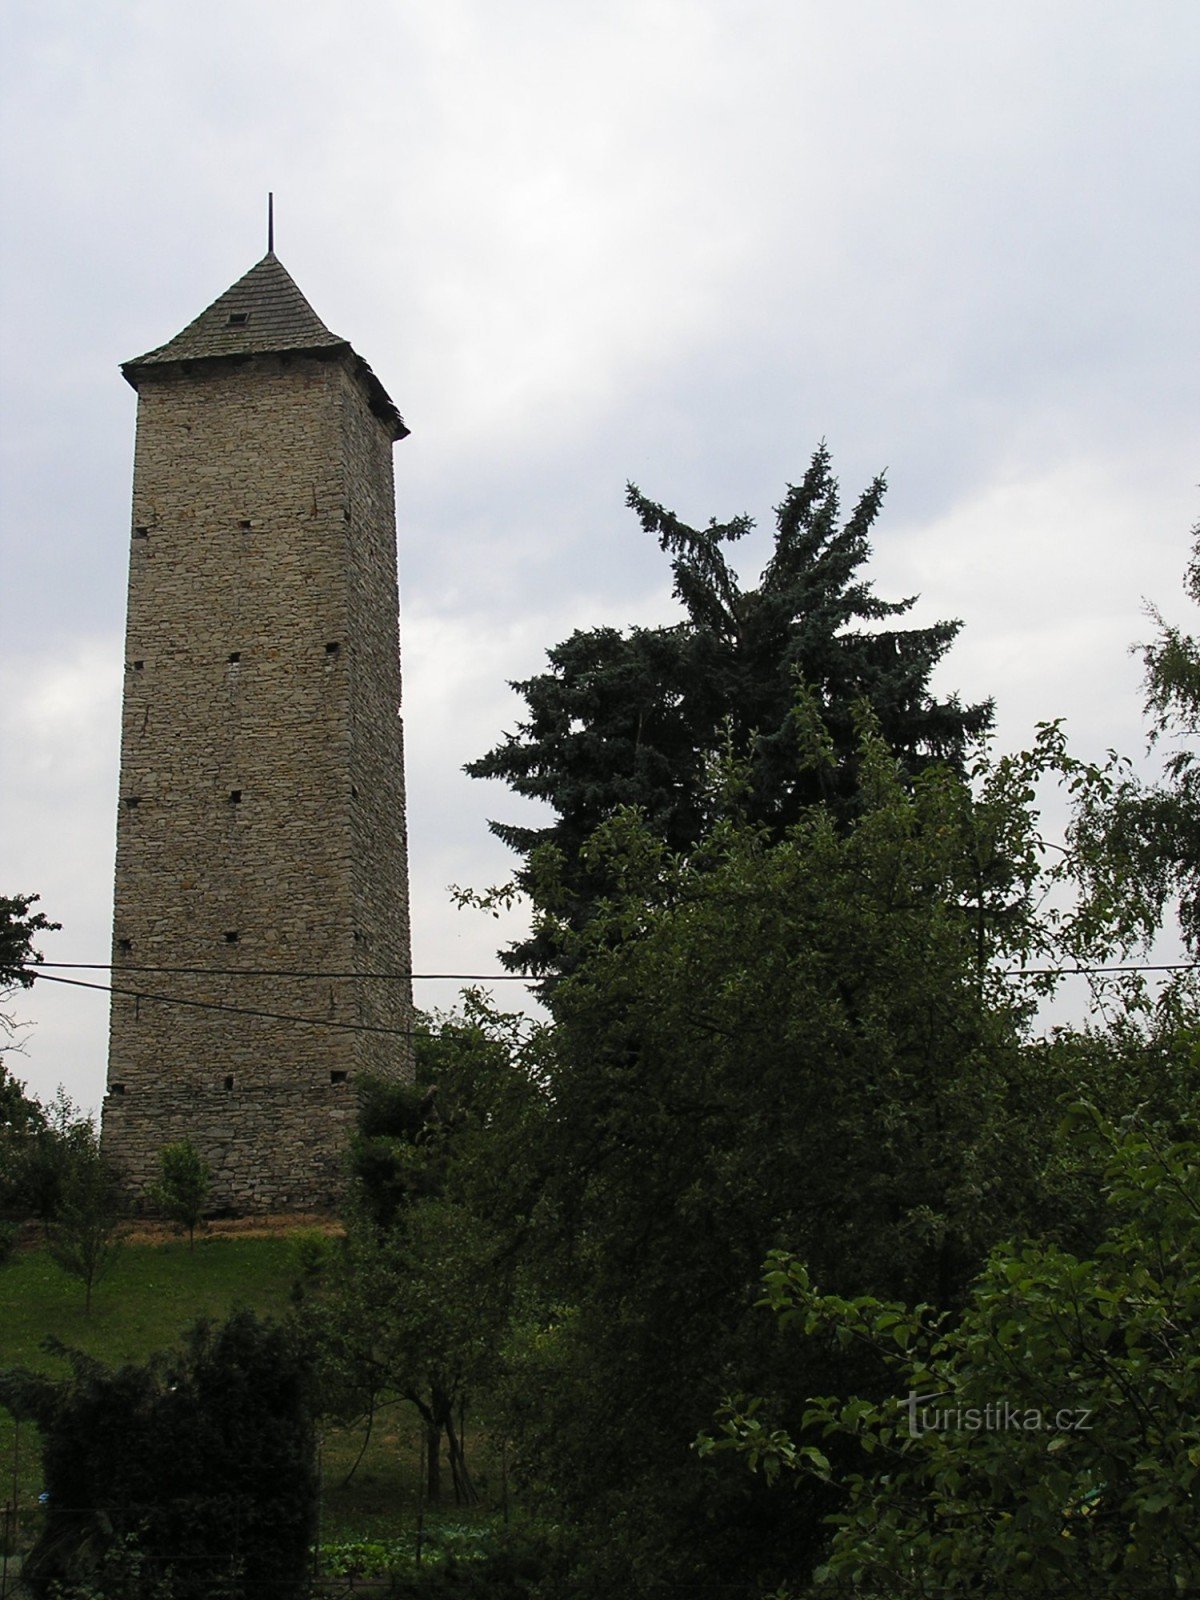 vandreservoirtårn